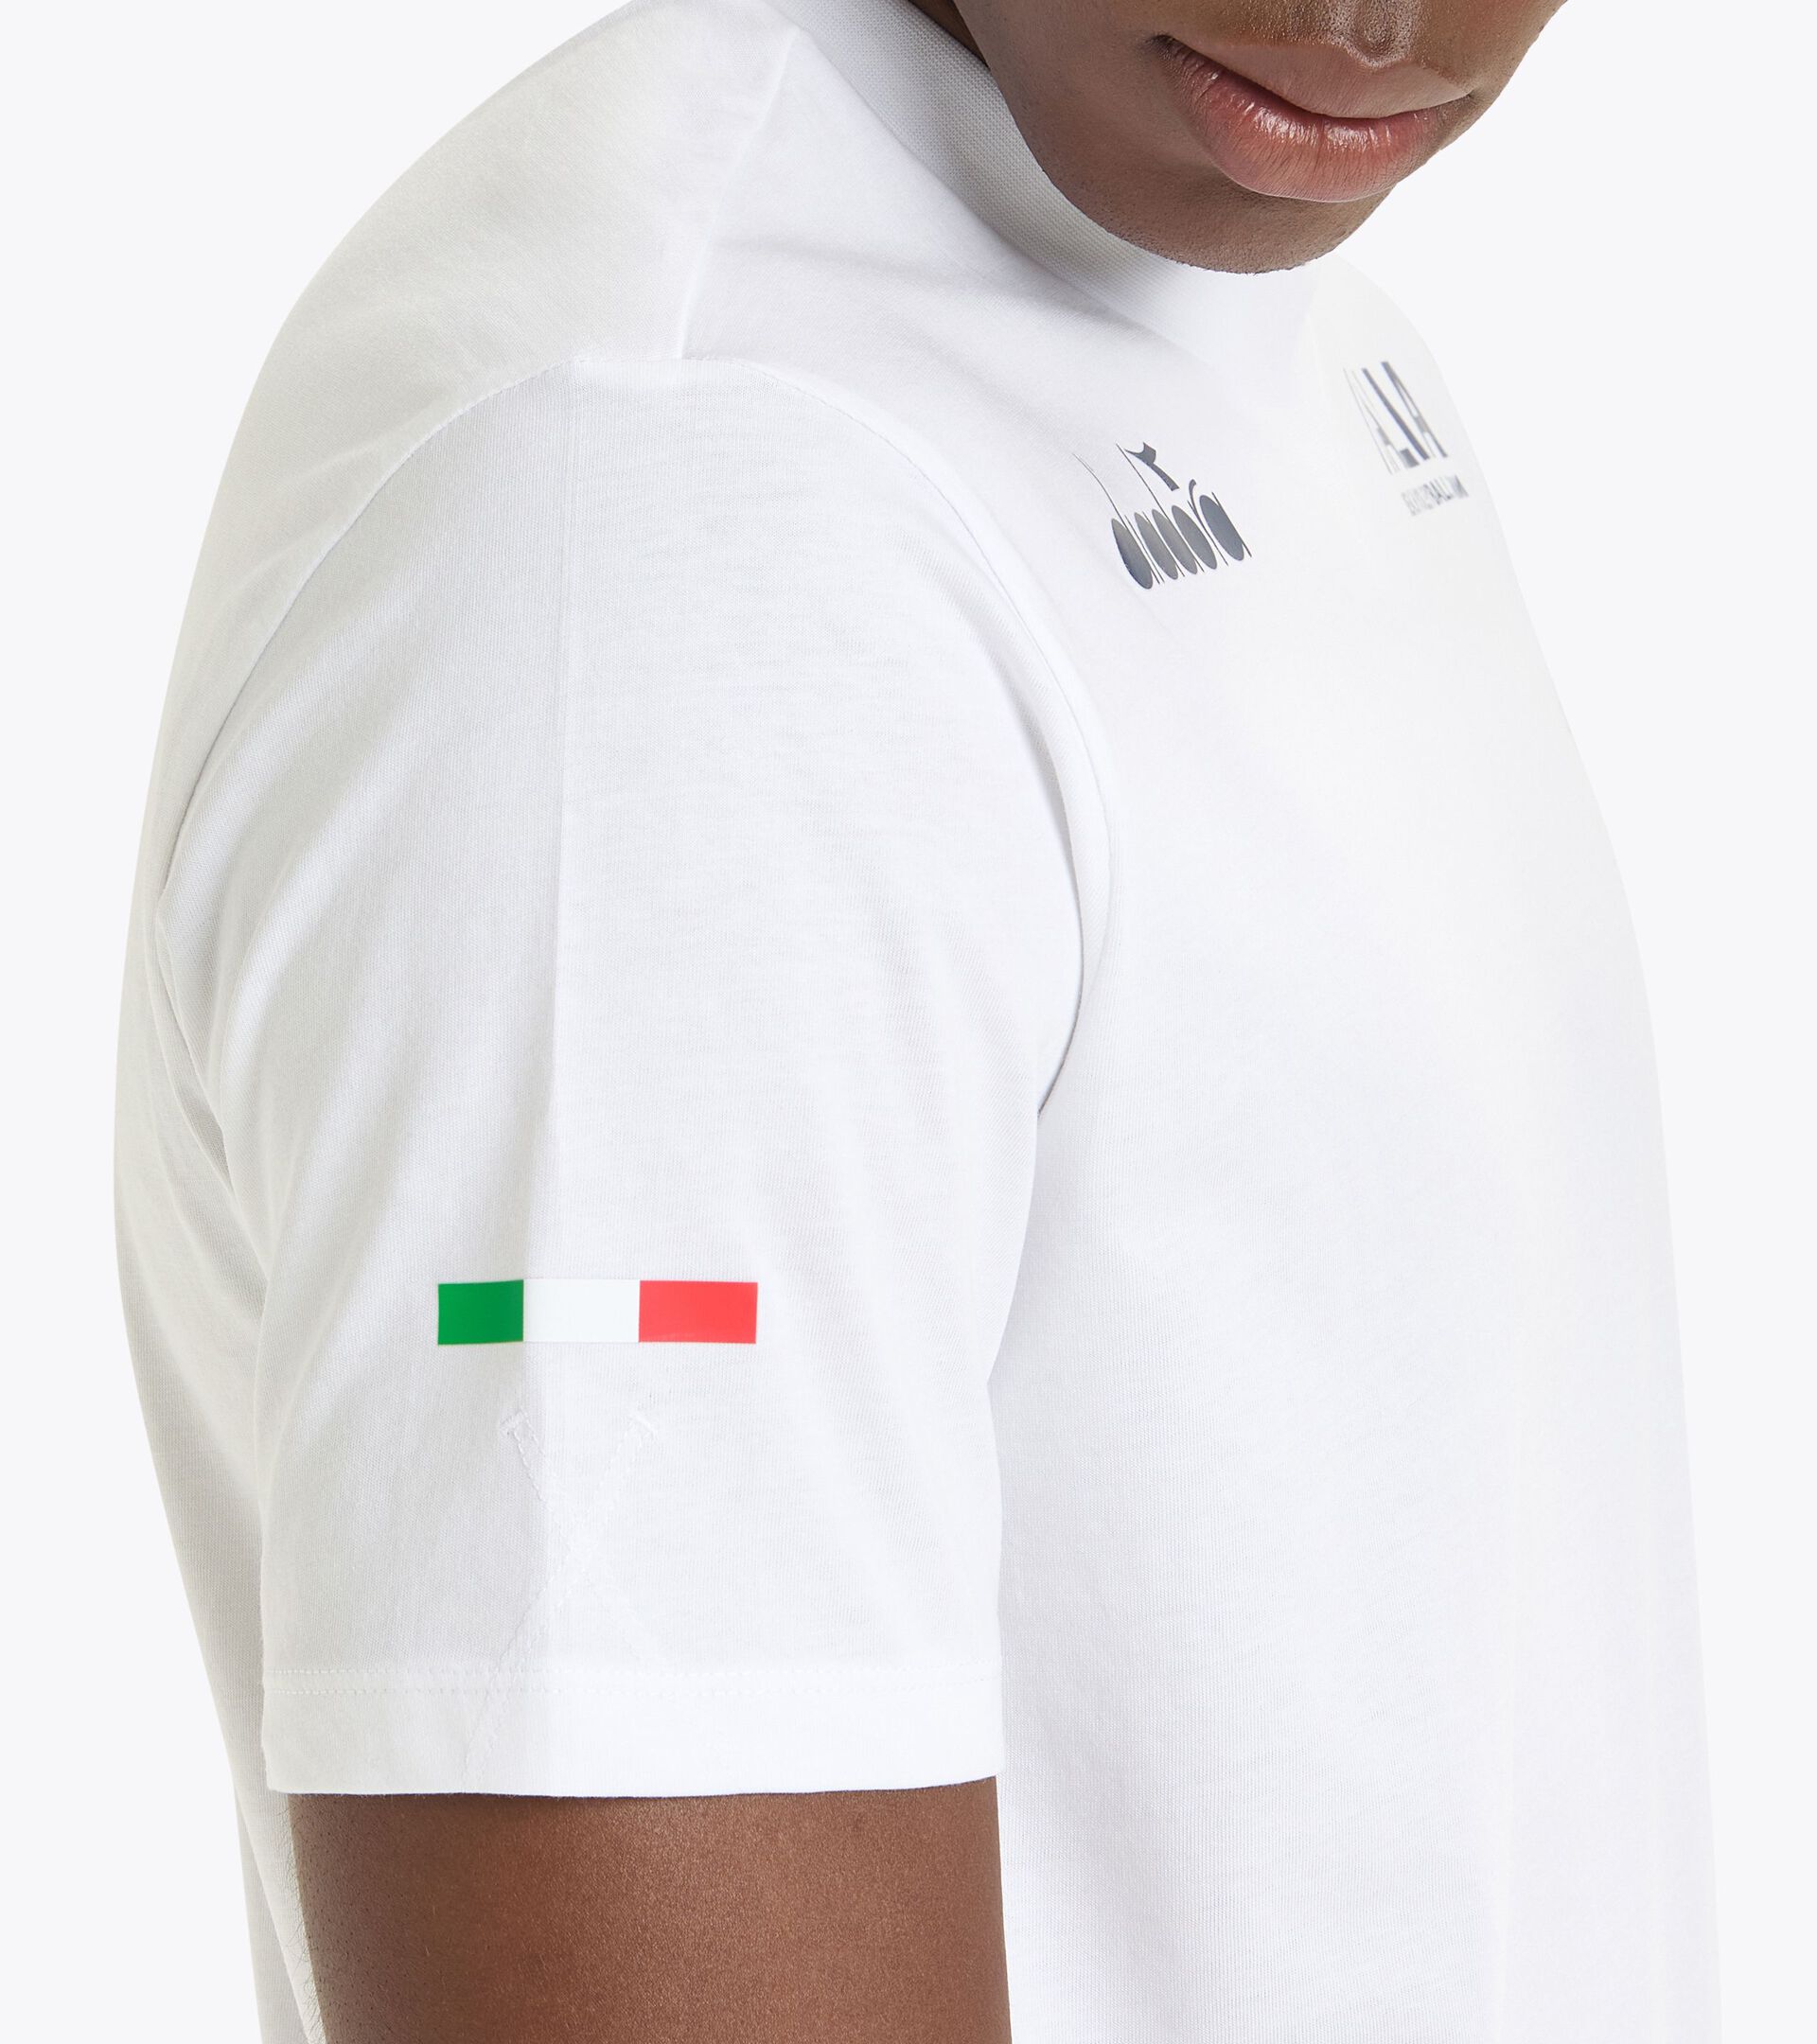 Representative t-shirt - Italy National Volleyball Team T-SHIRT RAPPRESENTANZA BV24 ITALIA OPTICAL WHITE - Diadora